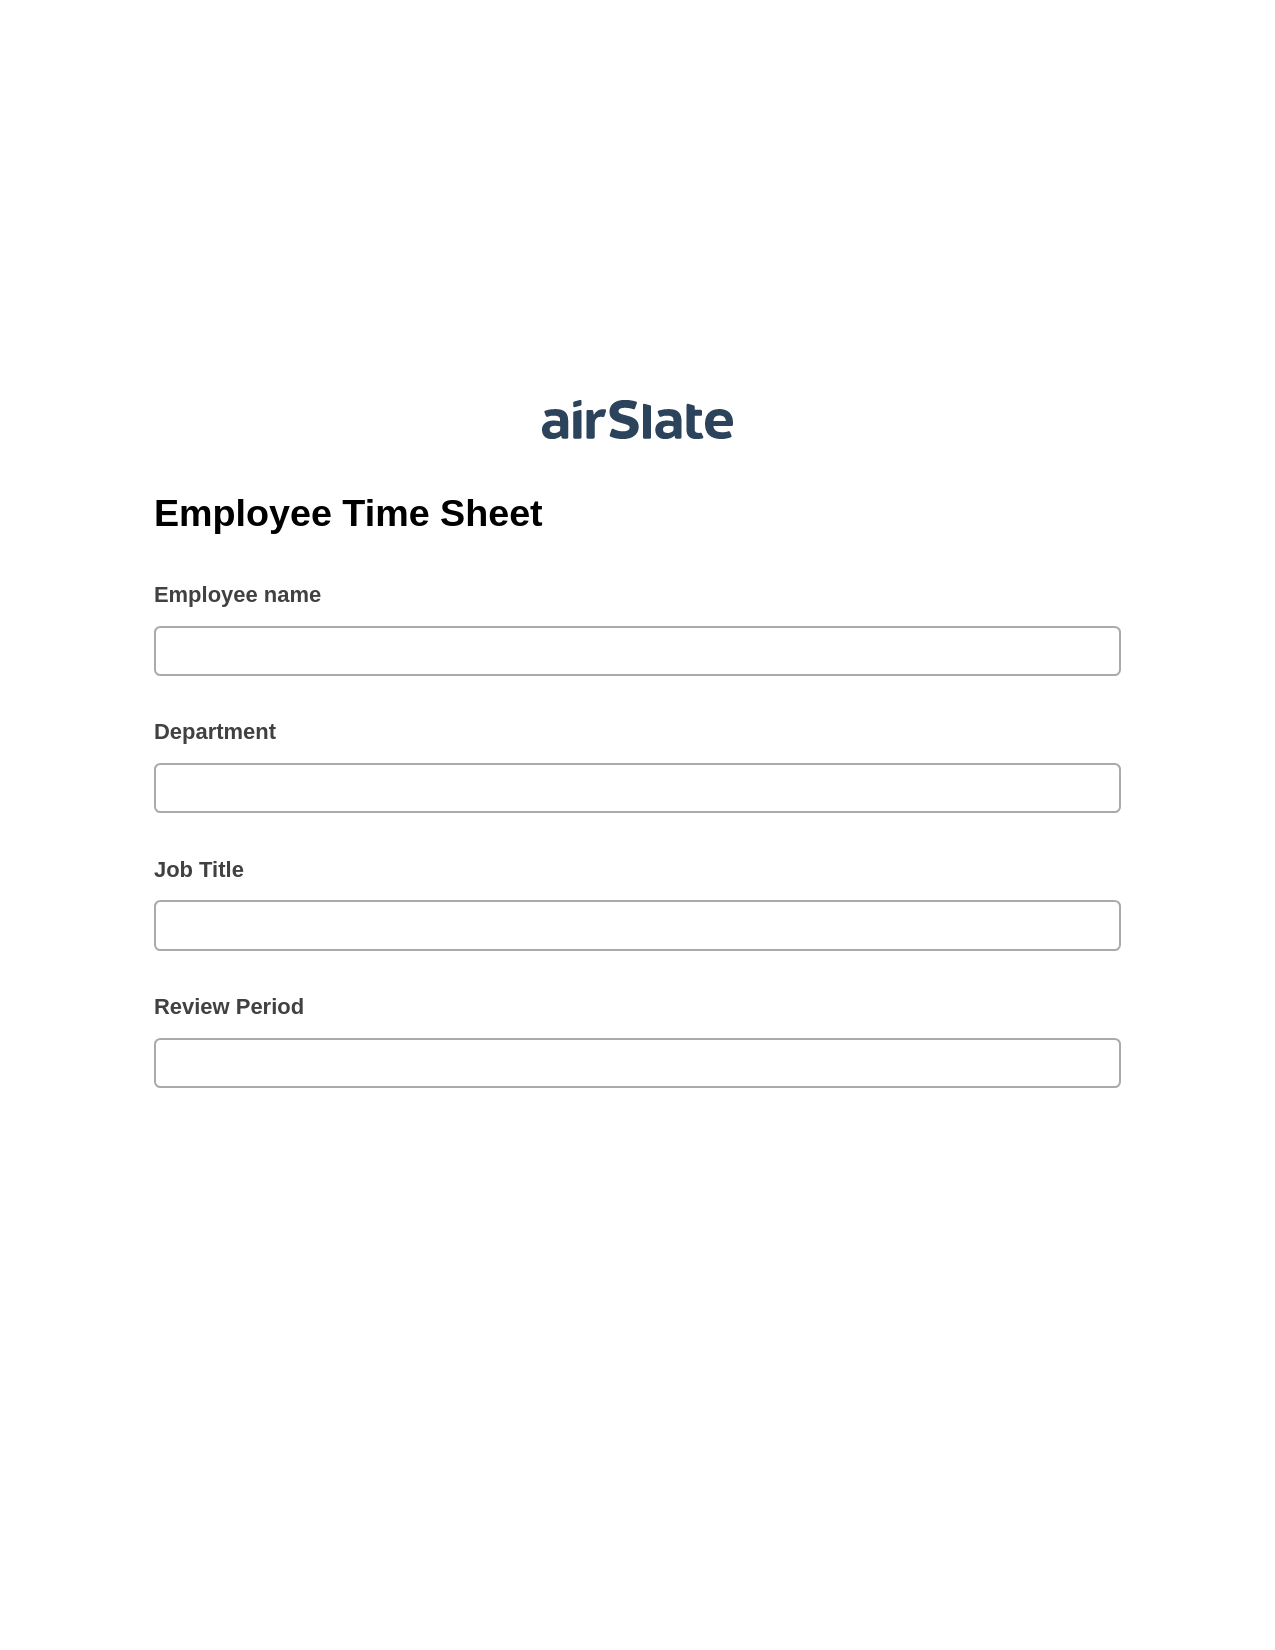 Multirole Employee Time Sheet Pre-fill from Office 365 Excel Bot, Google Cloud Print Bot, Webhook Postfinish Bot